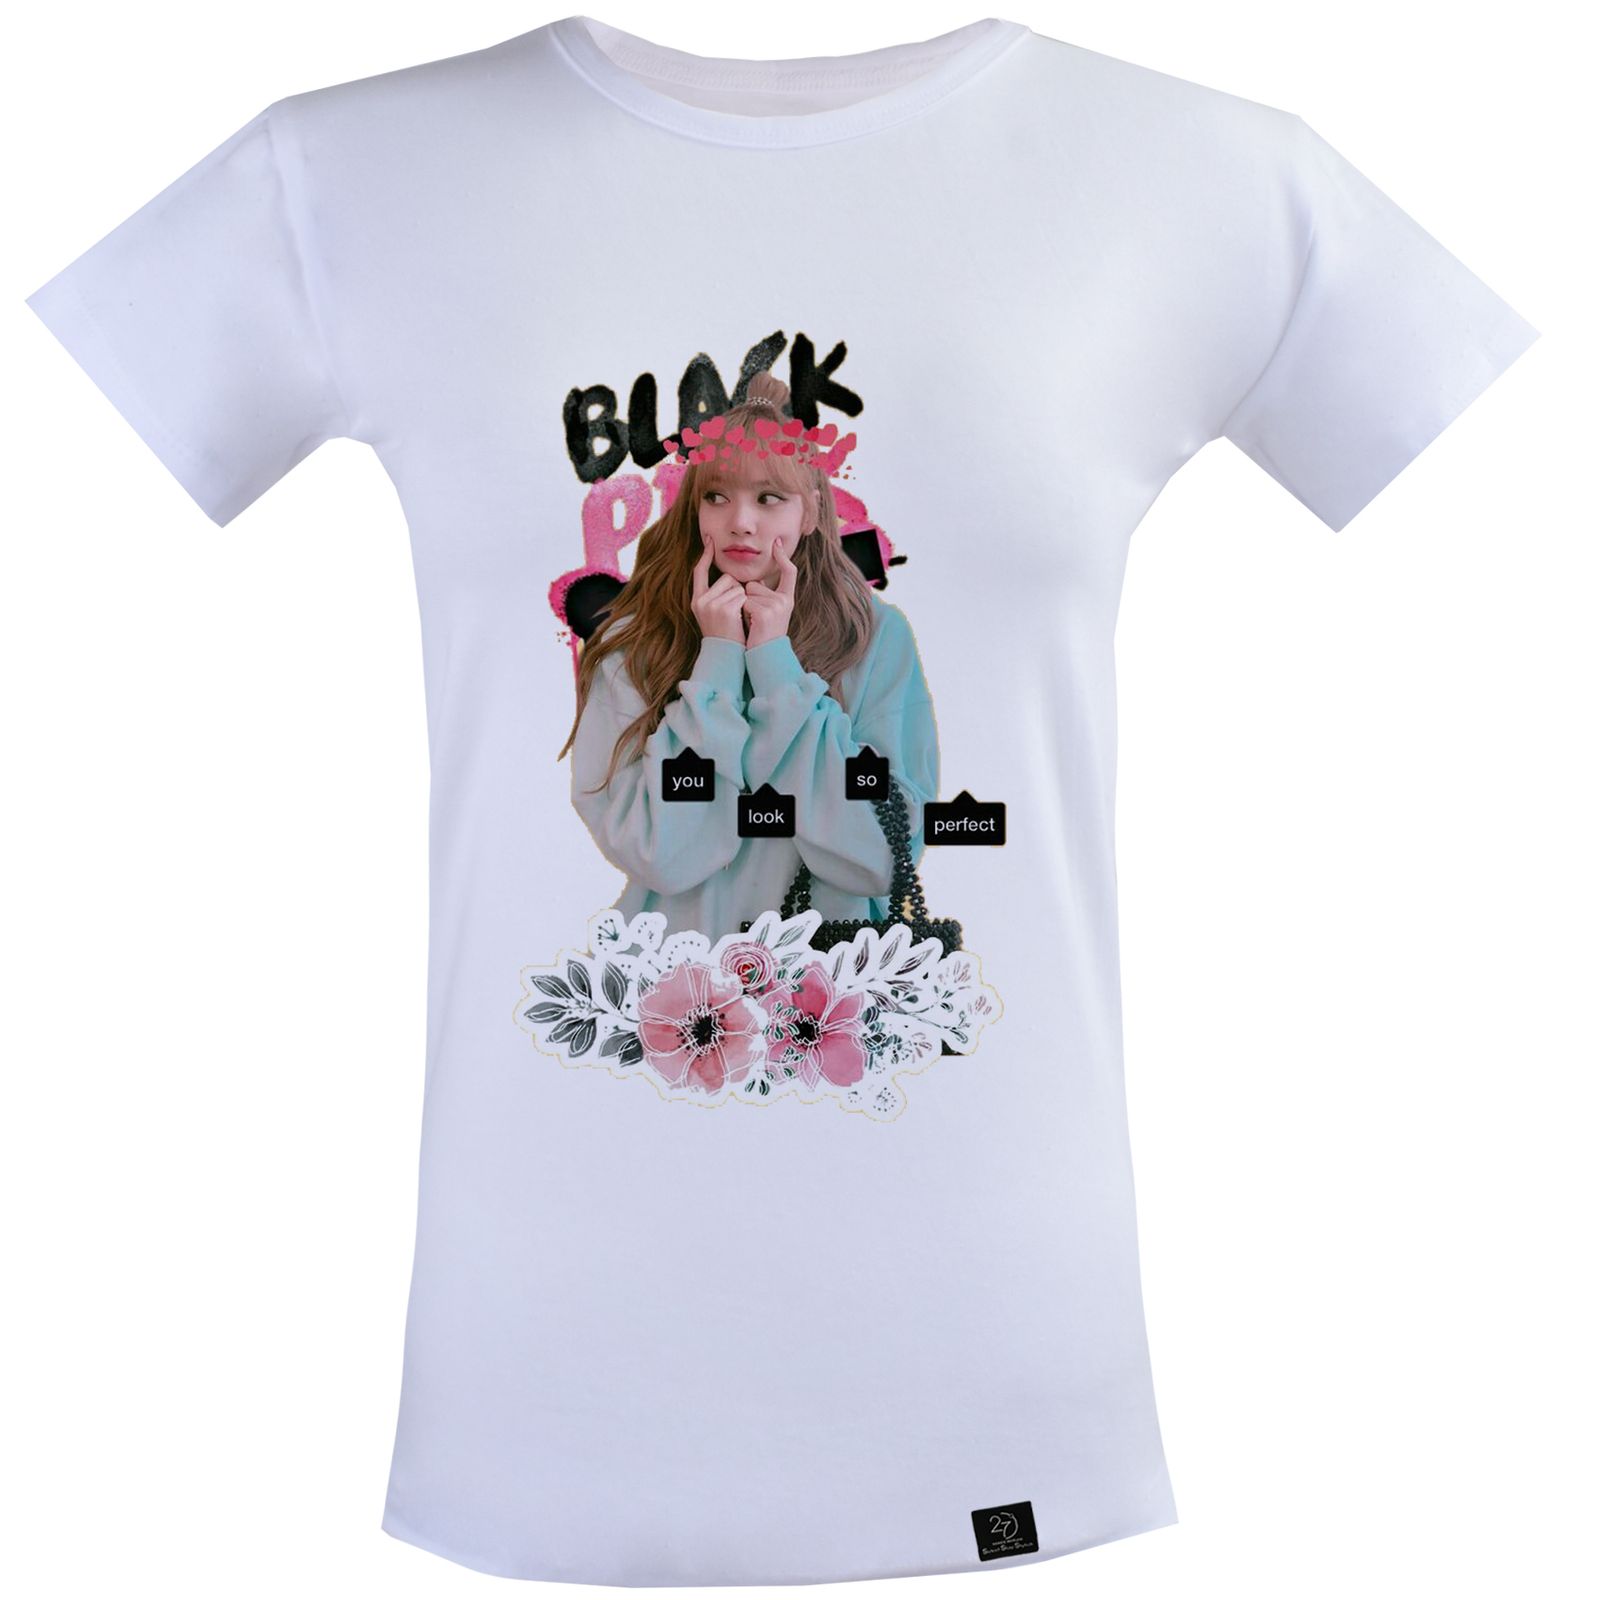 تی شرت آستین کوتاه زنانه 27 مدل لیسا بلک پینک کد WN510 -  - 2